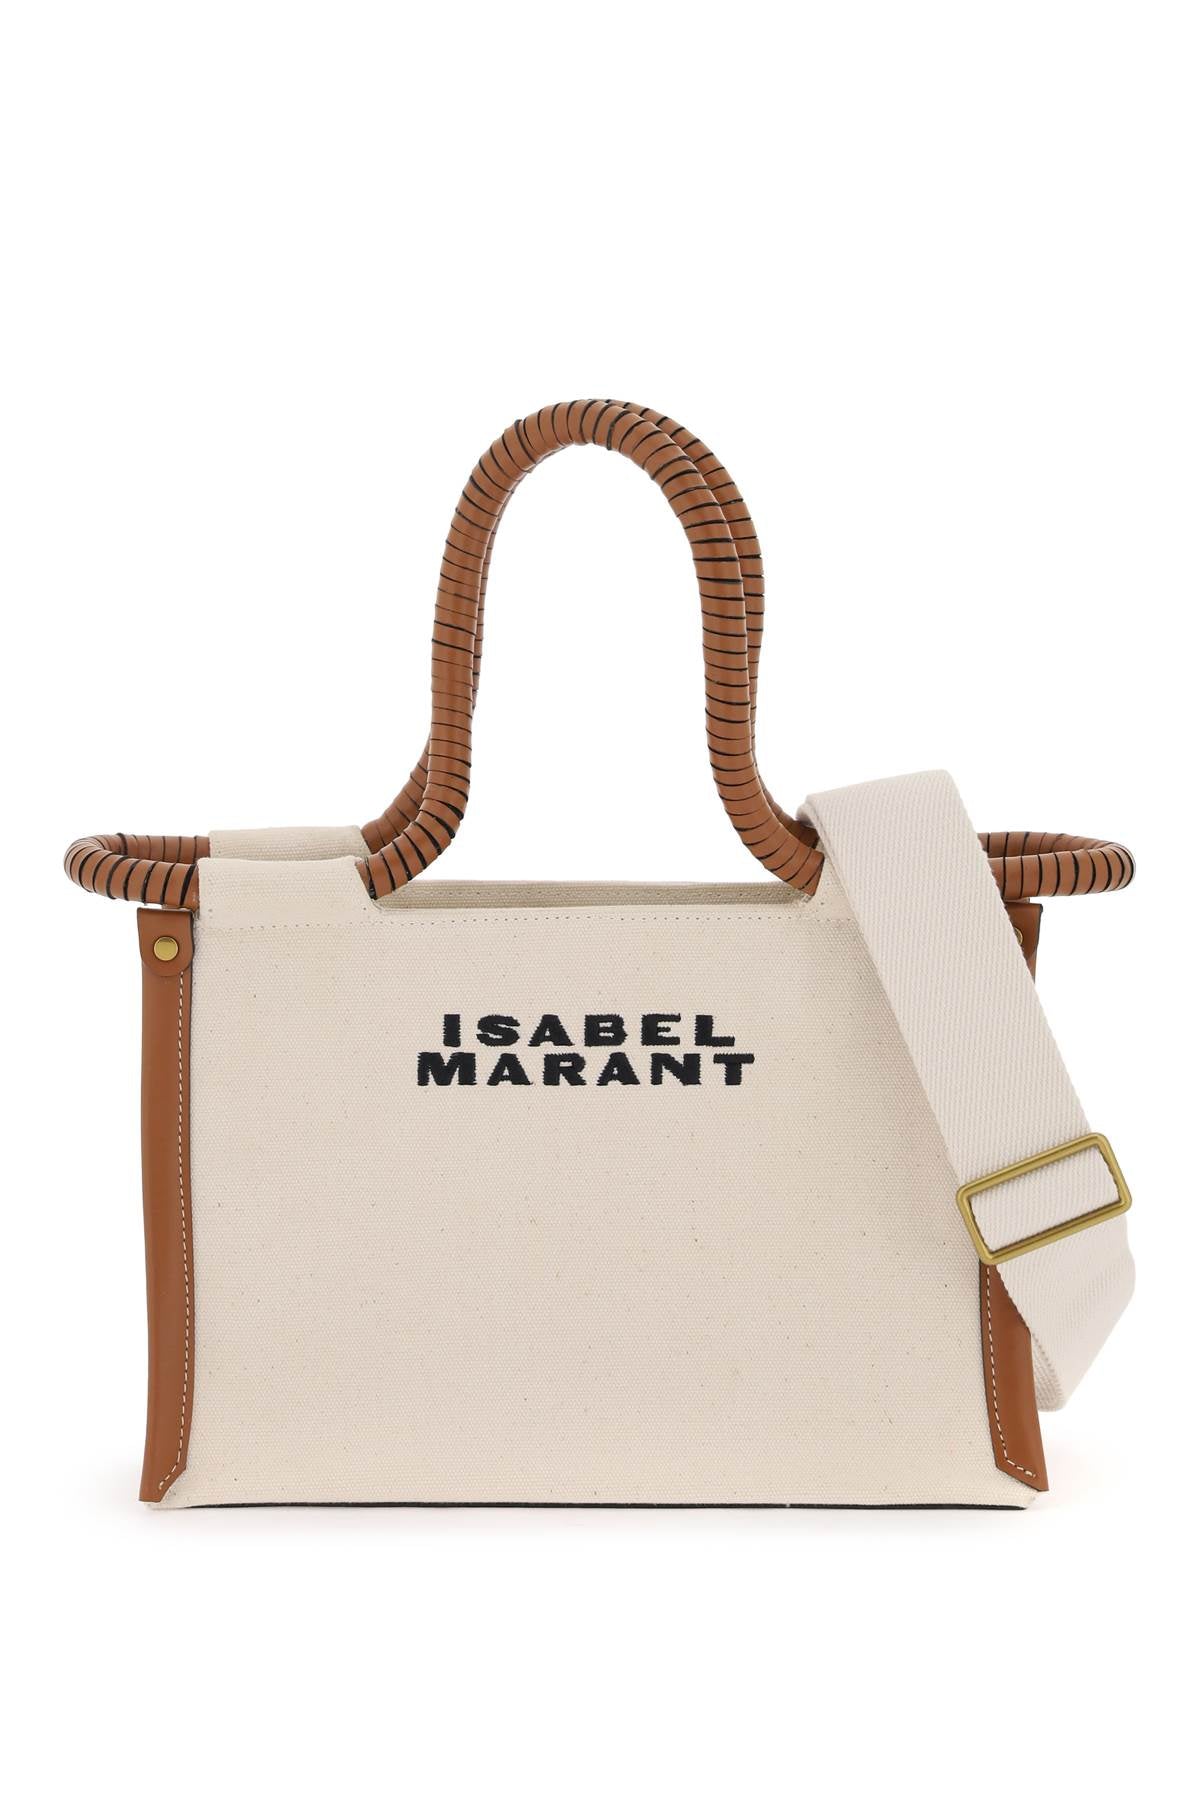 經典帆布手提包 - Isabel Marant季節款